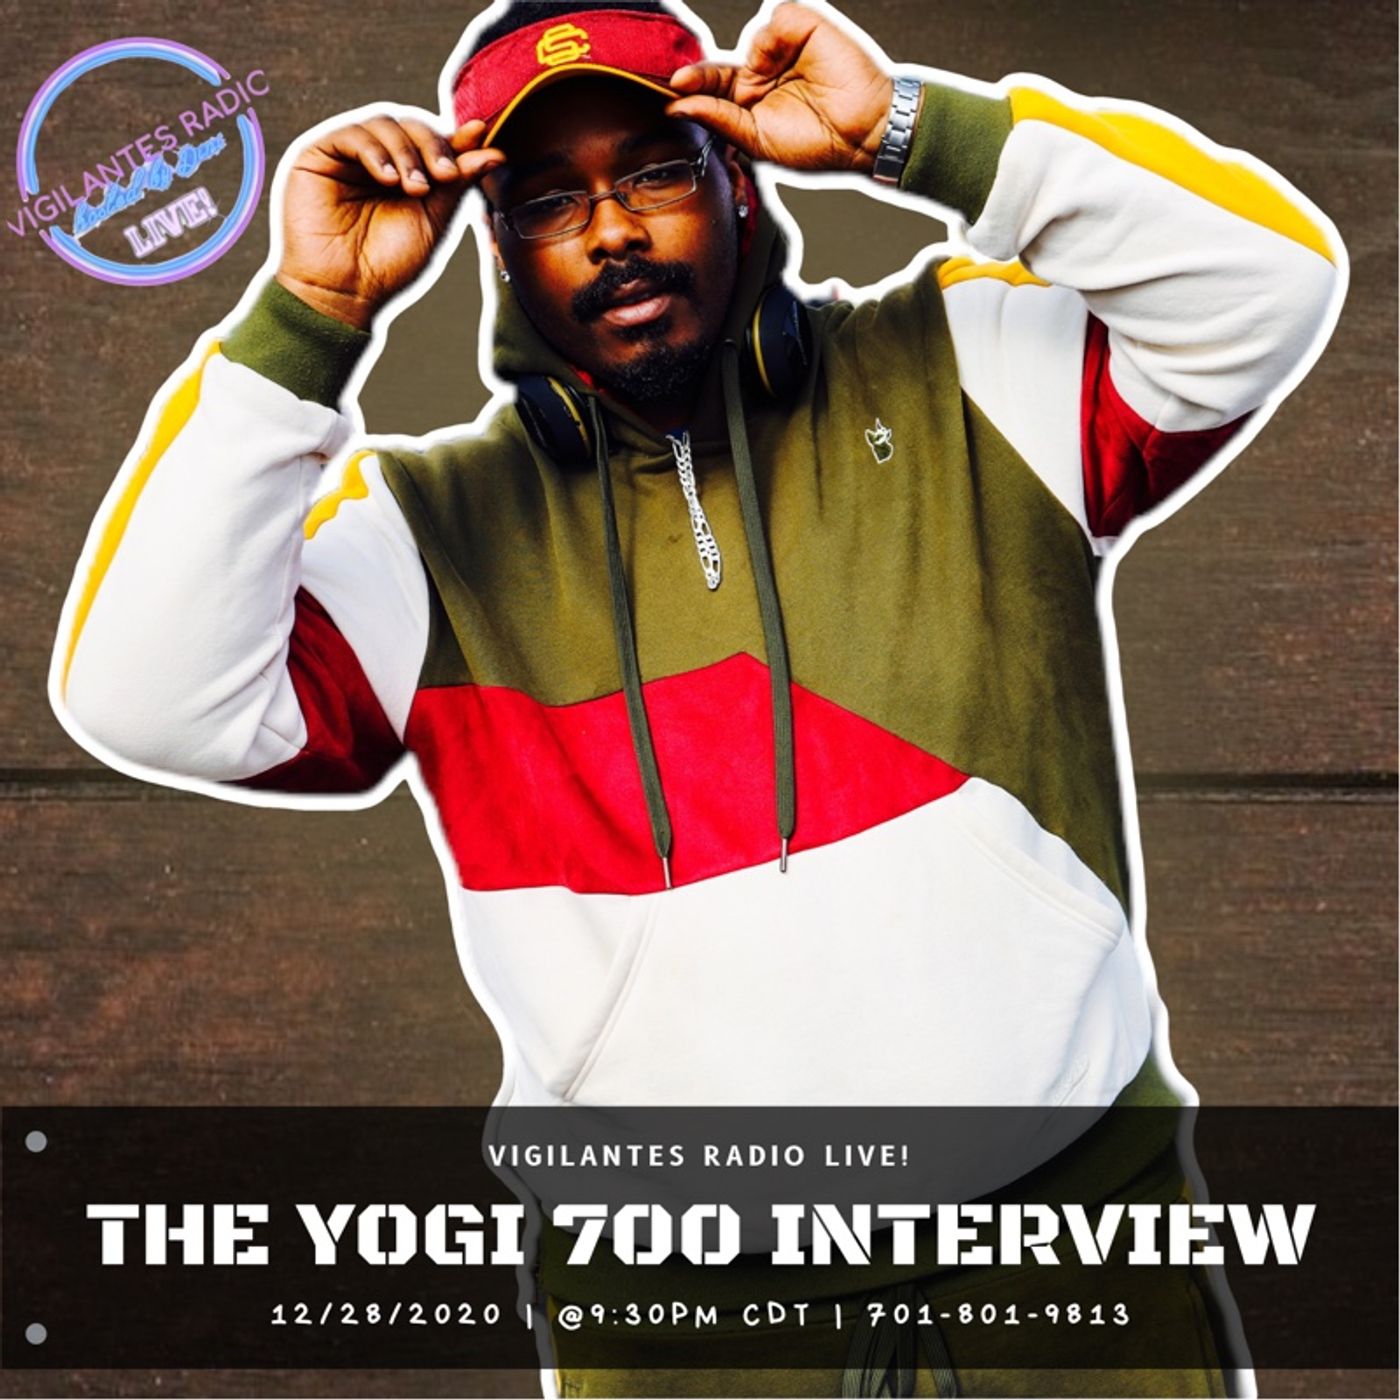 The Yogi 700 Interview. Image